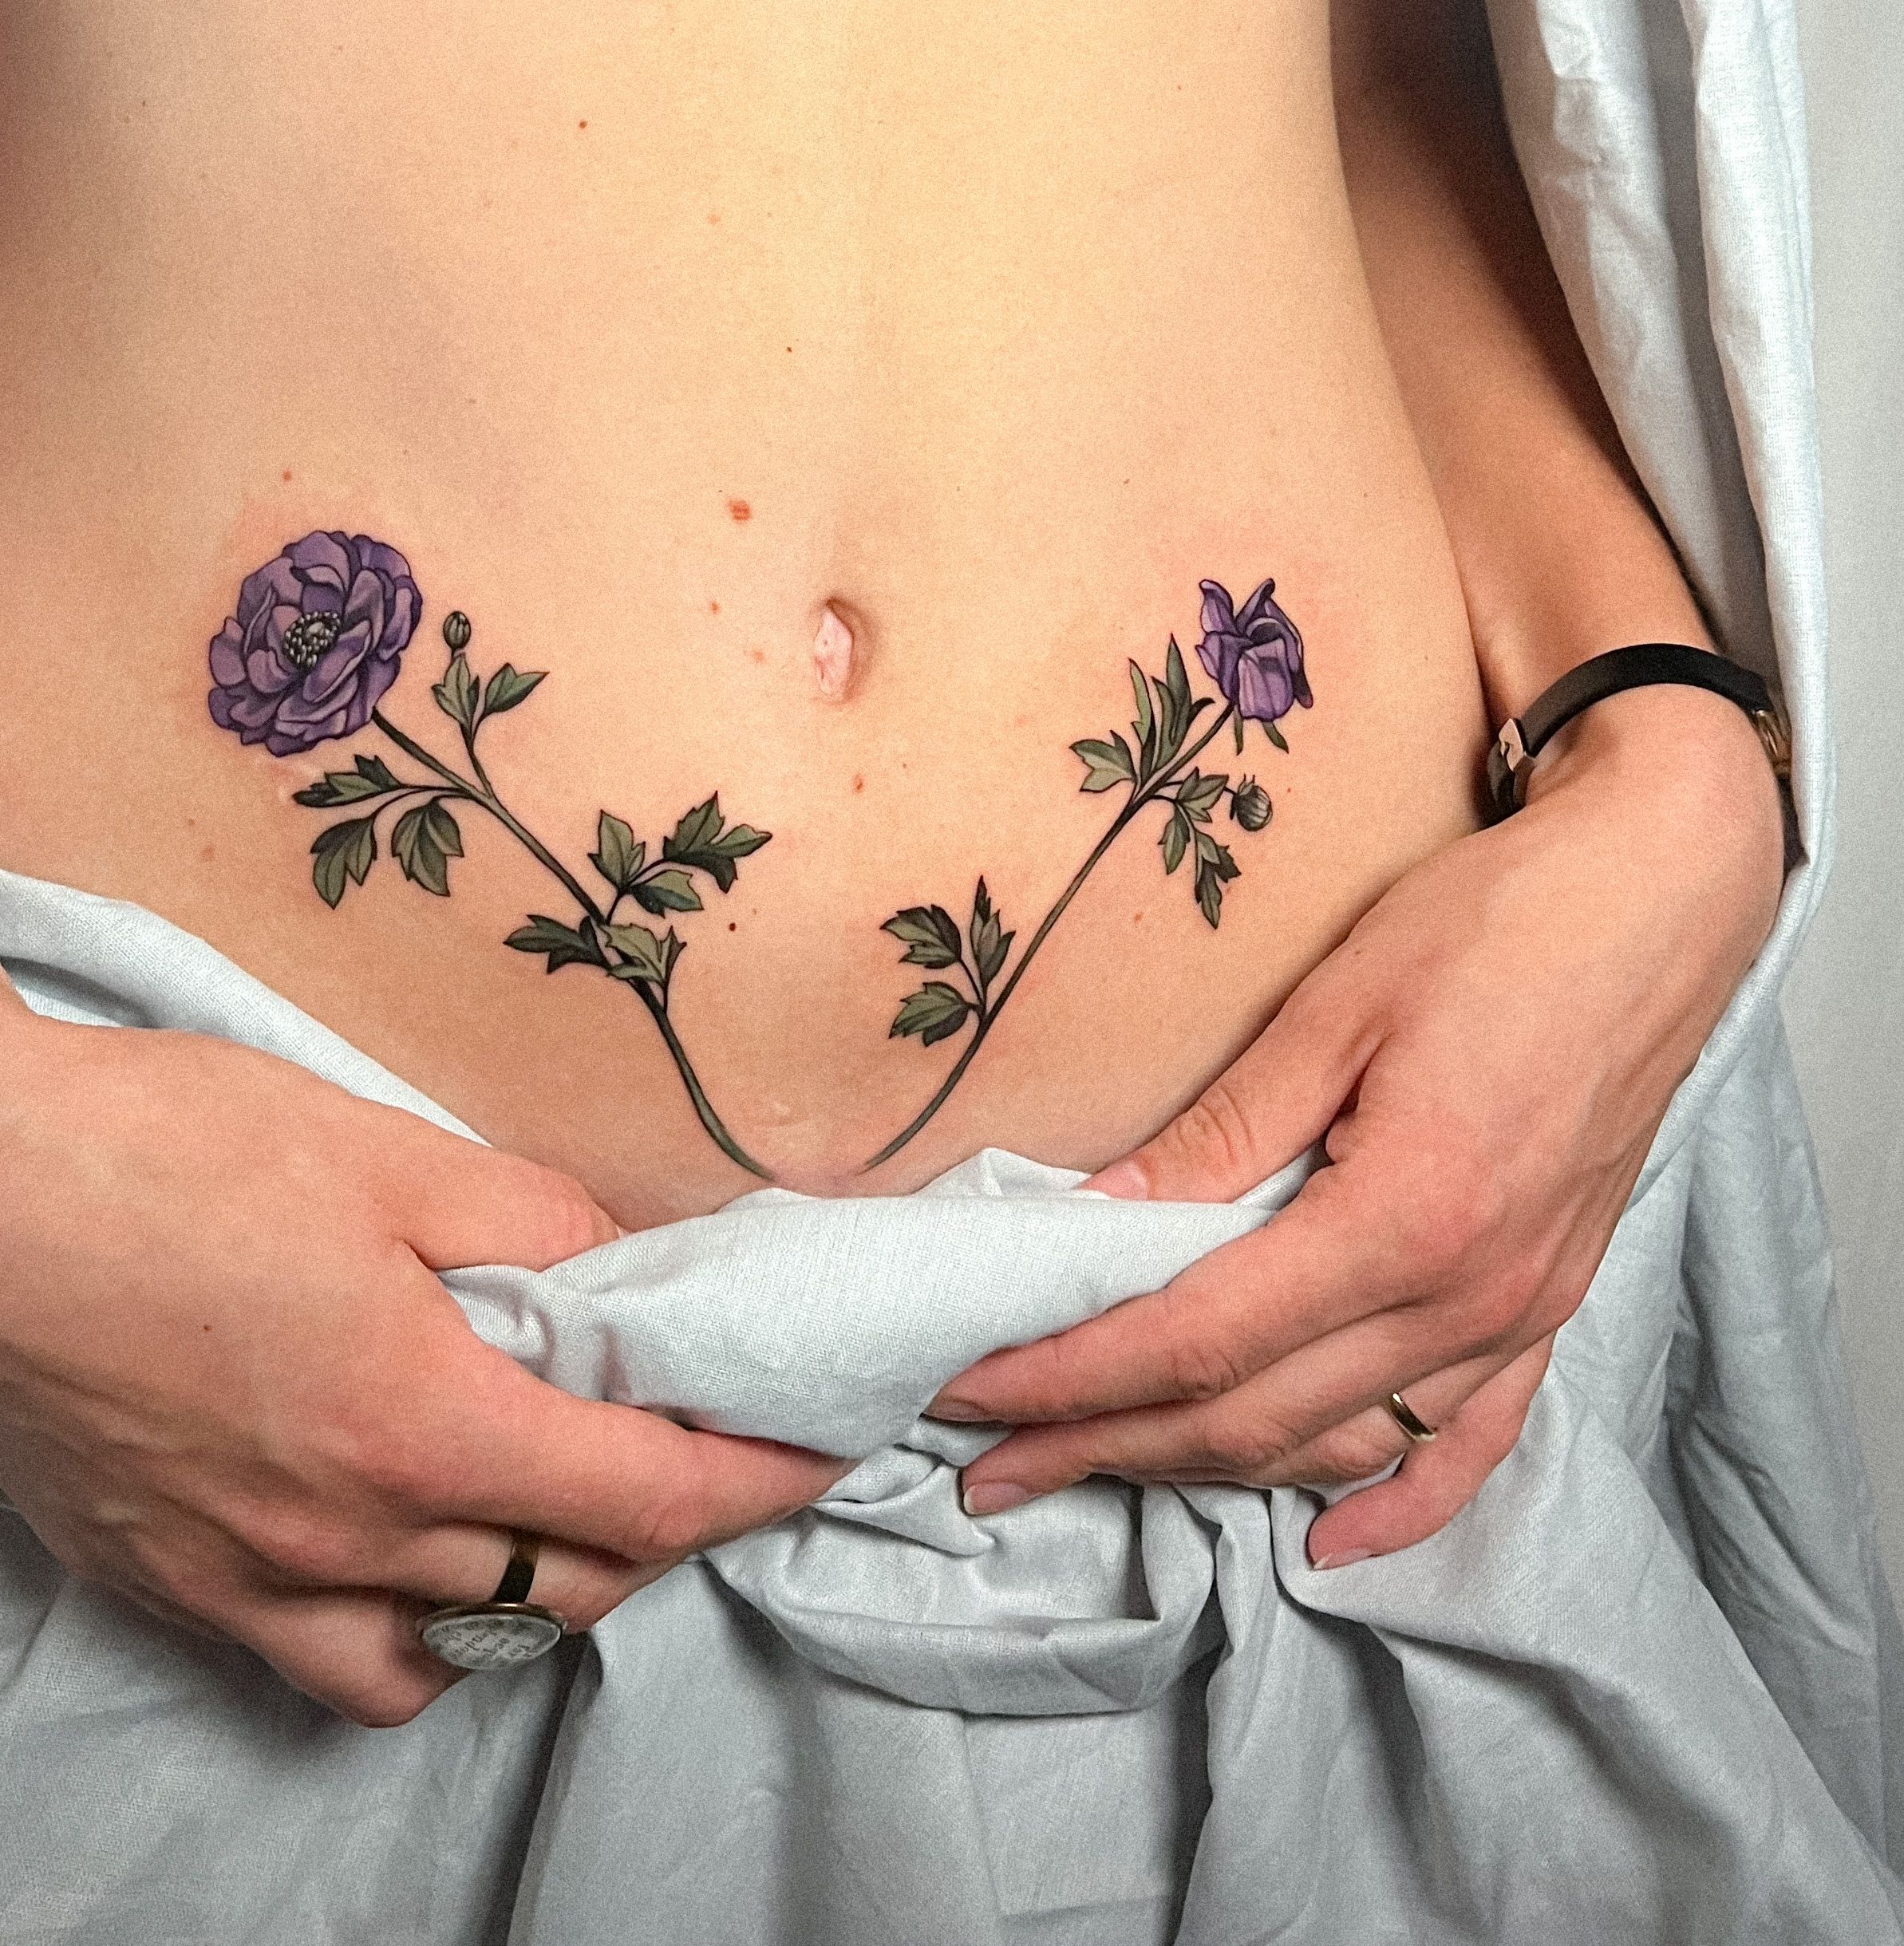 Woman in underwear showing Caesarean scar with flowers tattoo stock photo